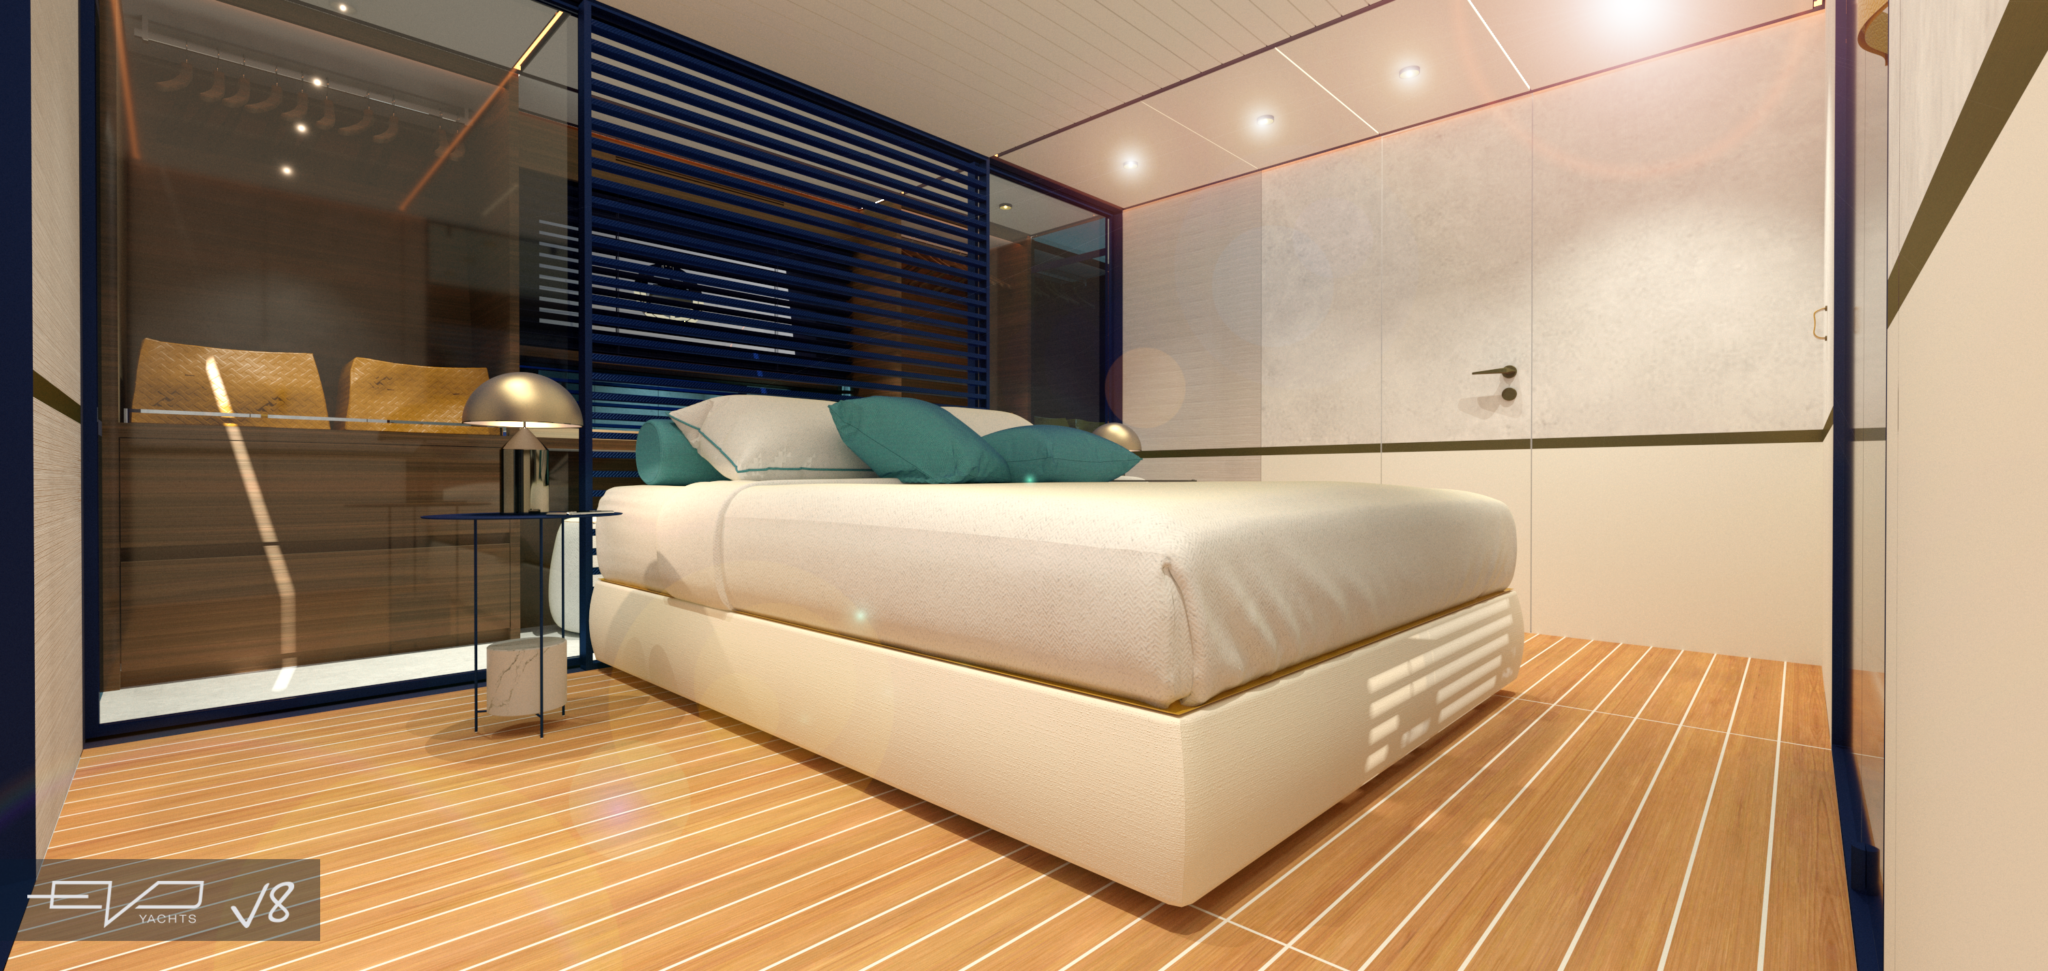 Evo Yachts V8 master cabin